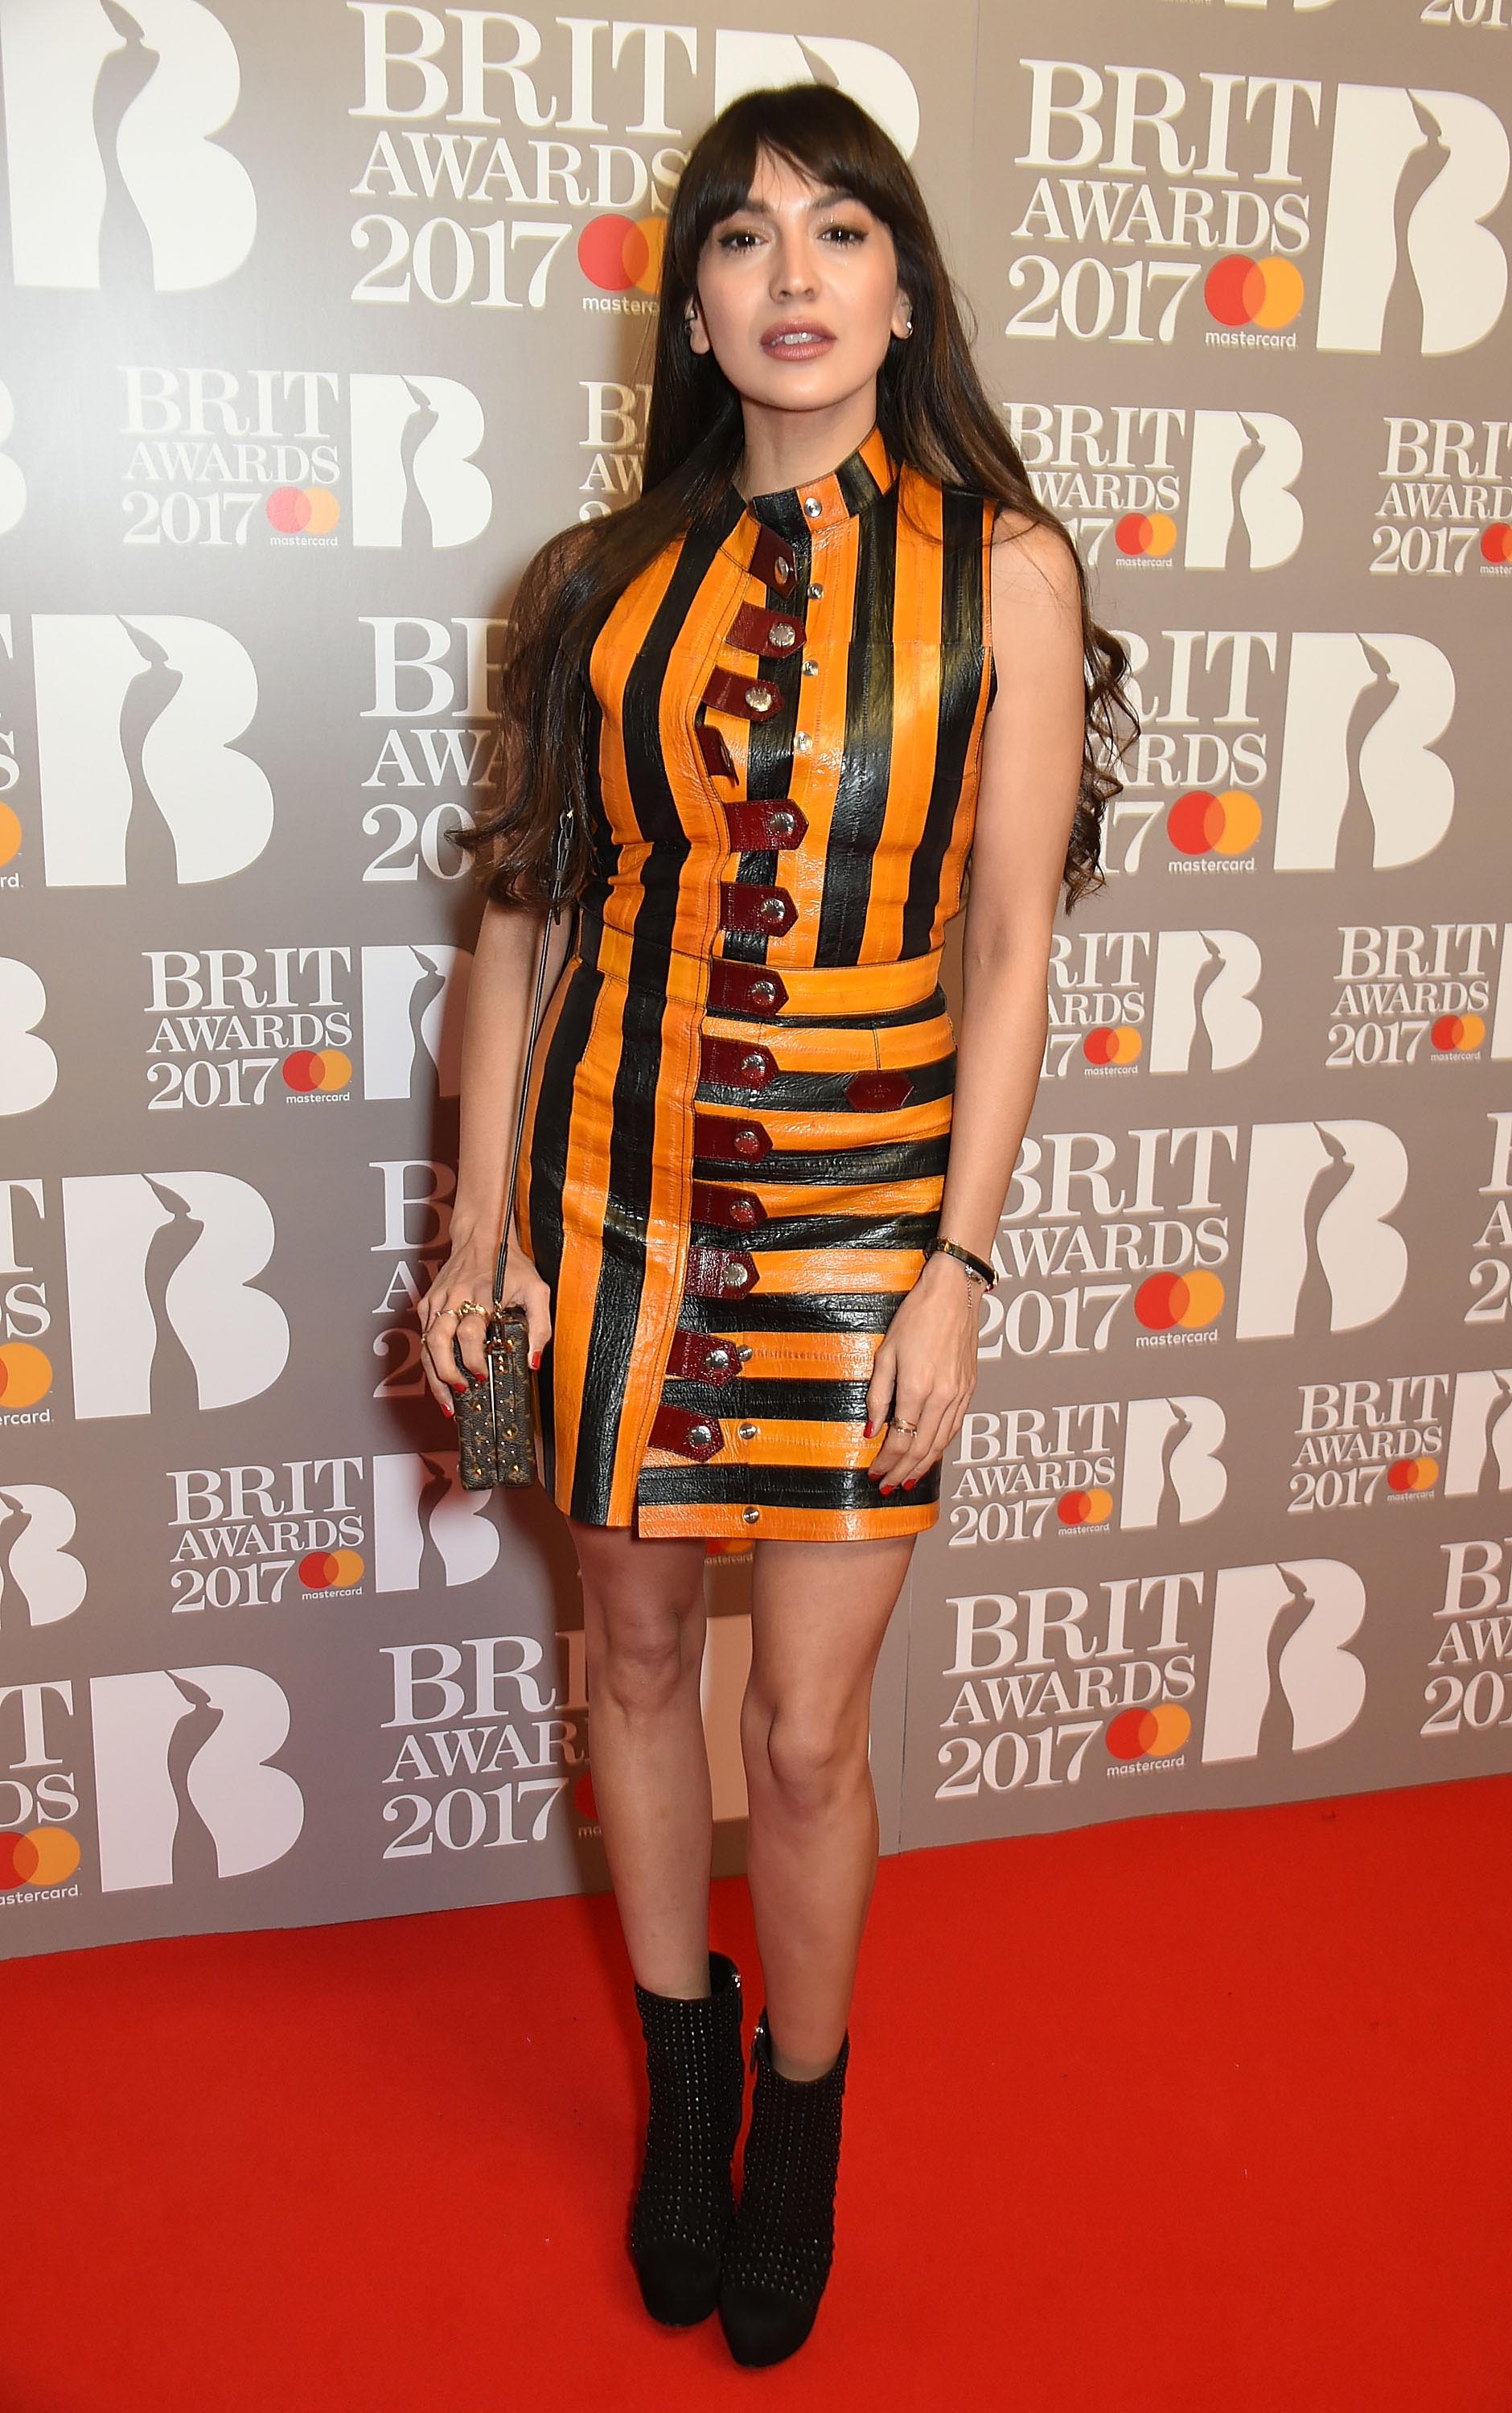 Zara Martin attends The BRIT Awards 2017